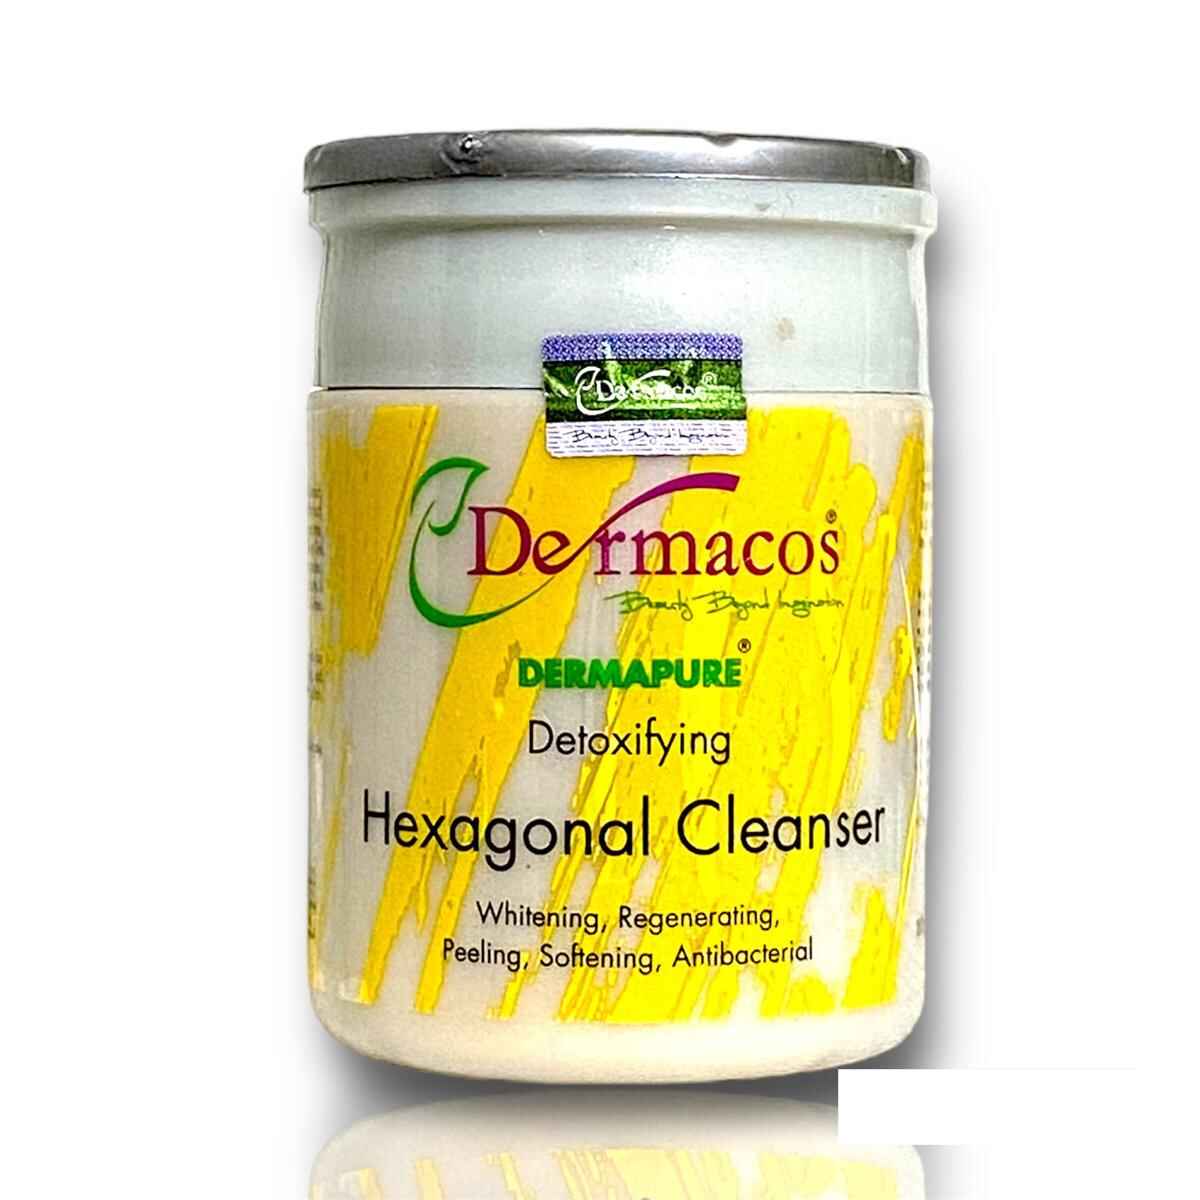 dermacos facial kit- hexagonal cleansers